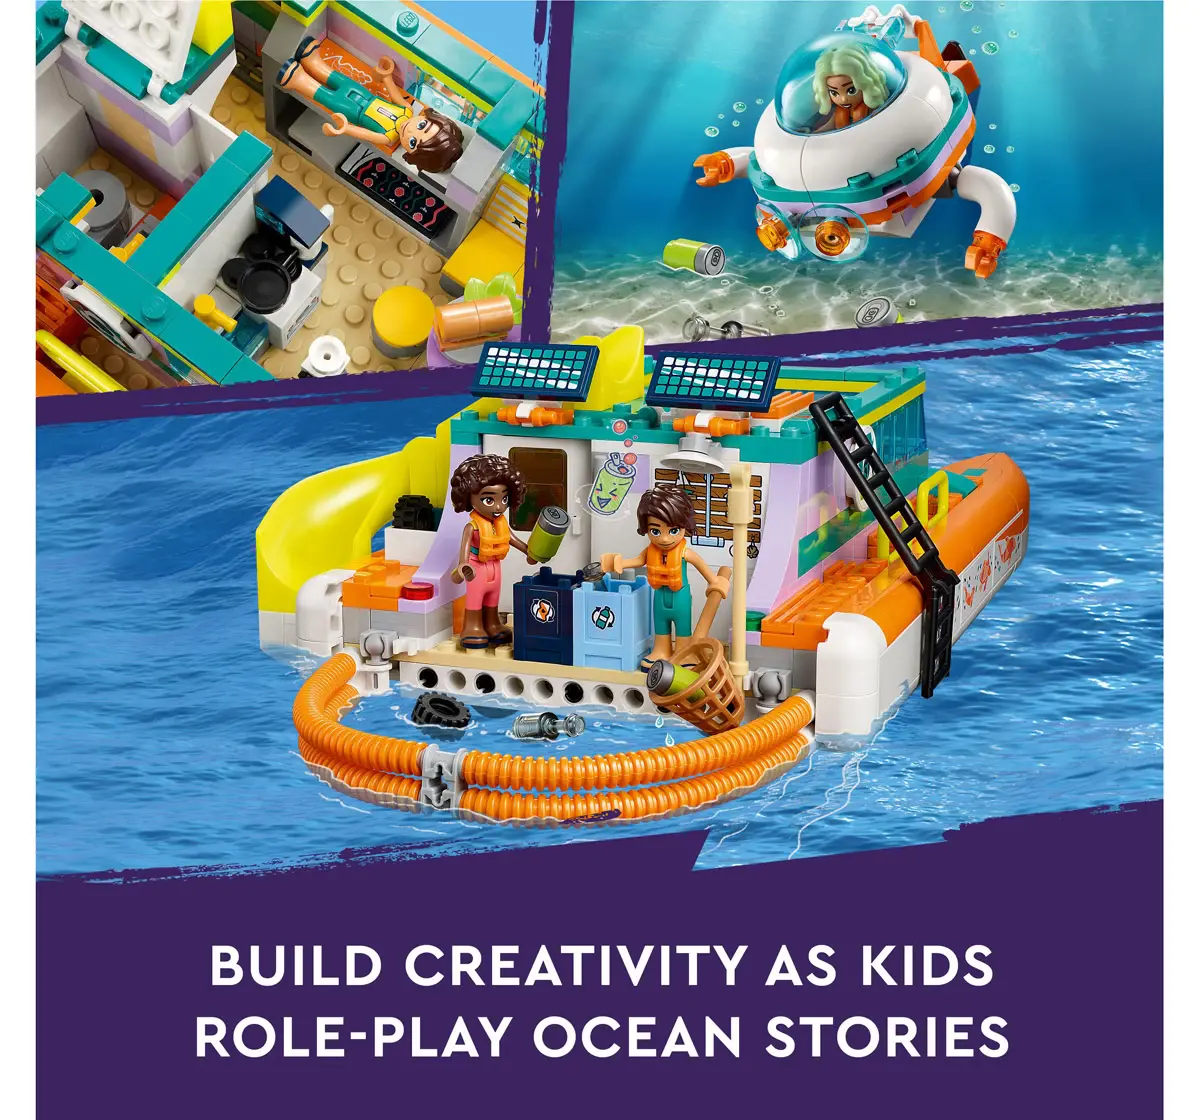 Lego Friends Sea Rescue Boat 41734 Building Toy Set Multicolour For Kids Ages 7Y+ (717 Pieces)